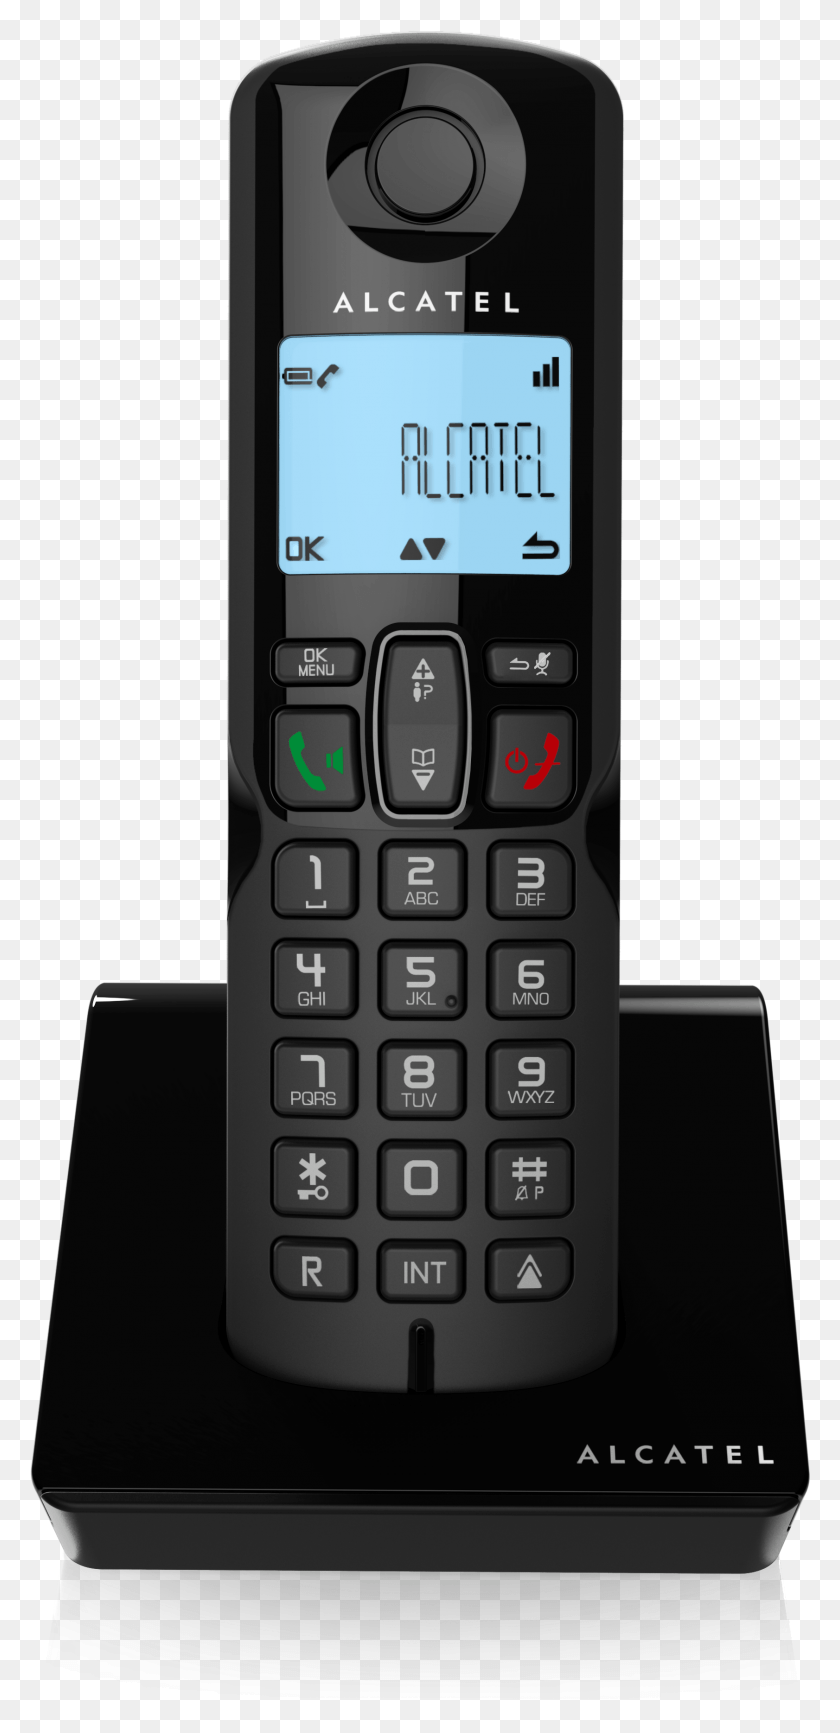 1682x3608 Descargar Png Alcatel Phones S250 Black Front Picture Telefonos Fijos Inalambricos Alcatel, Mobile Phone, Phone, Electronics Hd Png